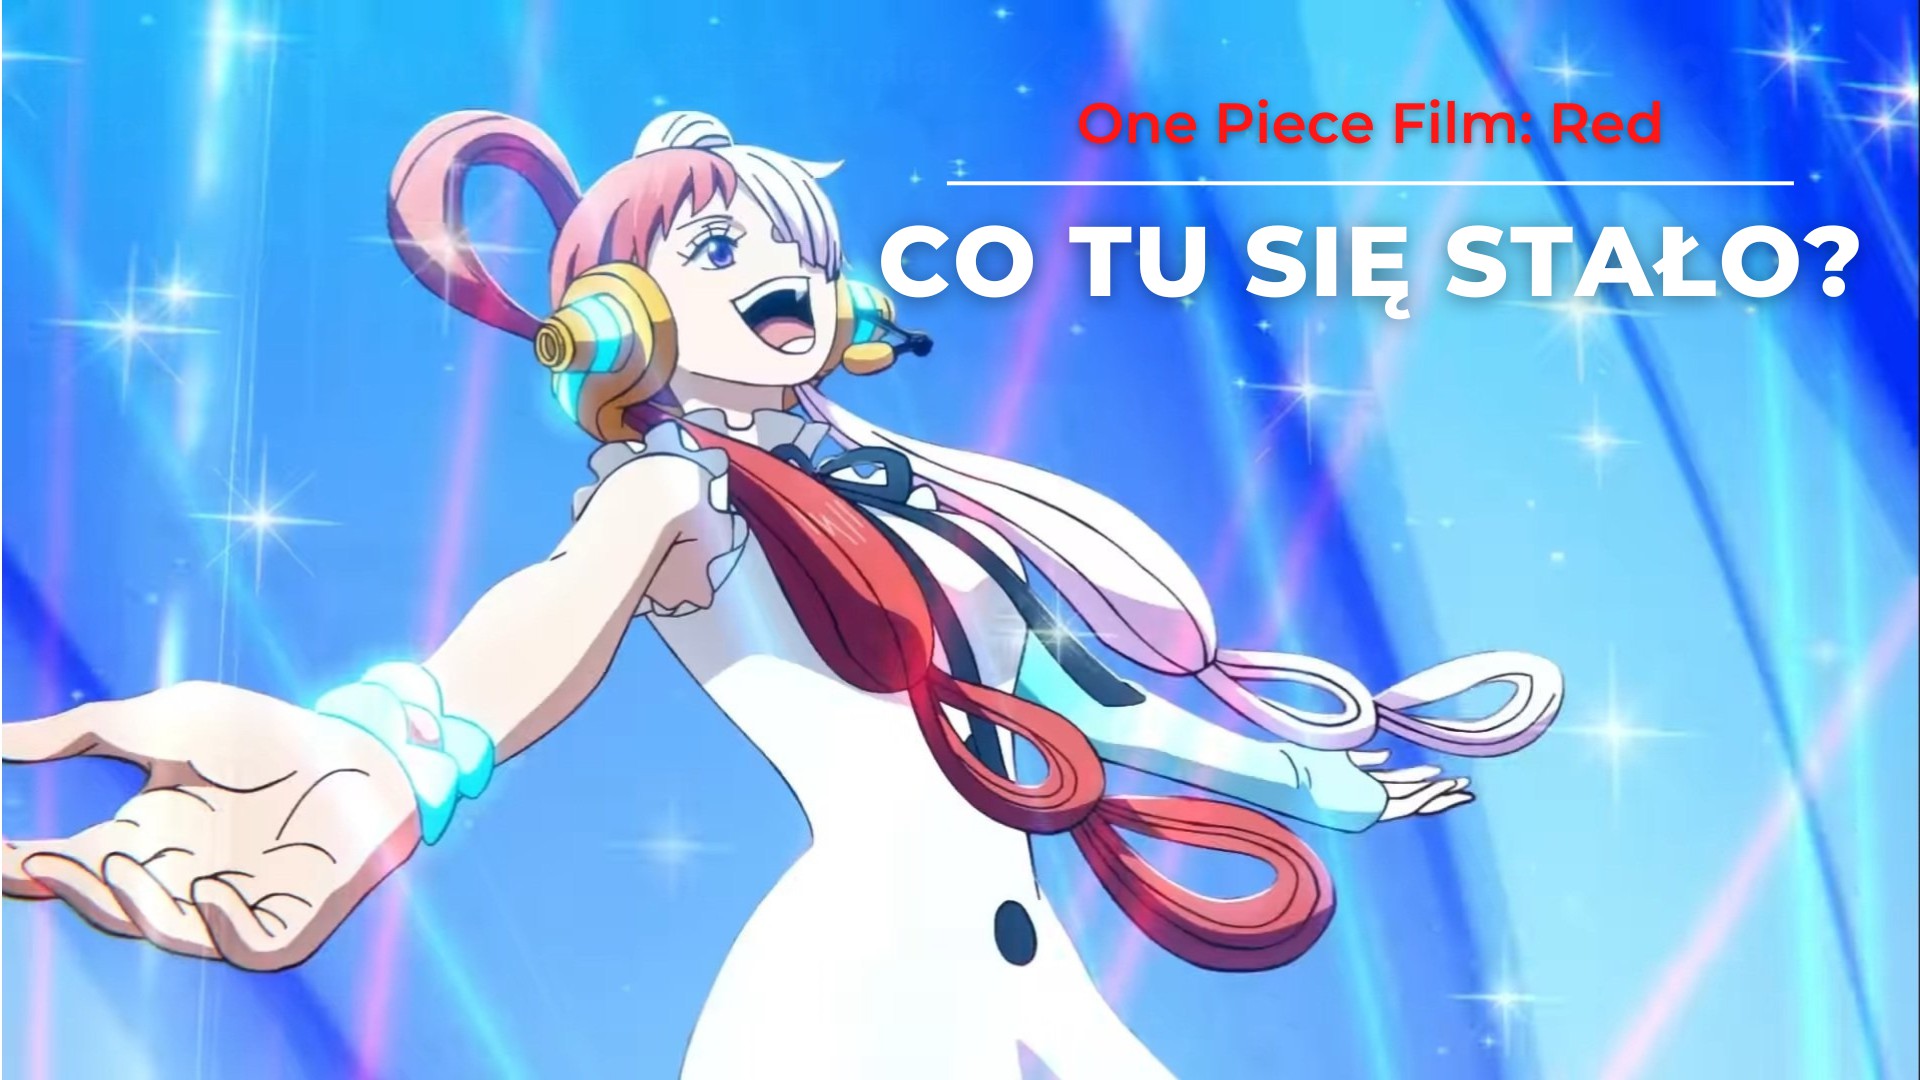 One Piece Film: Red - Apple TV